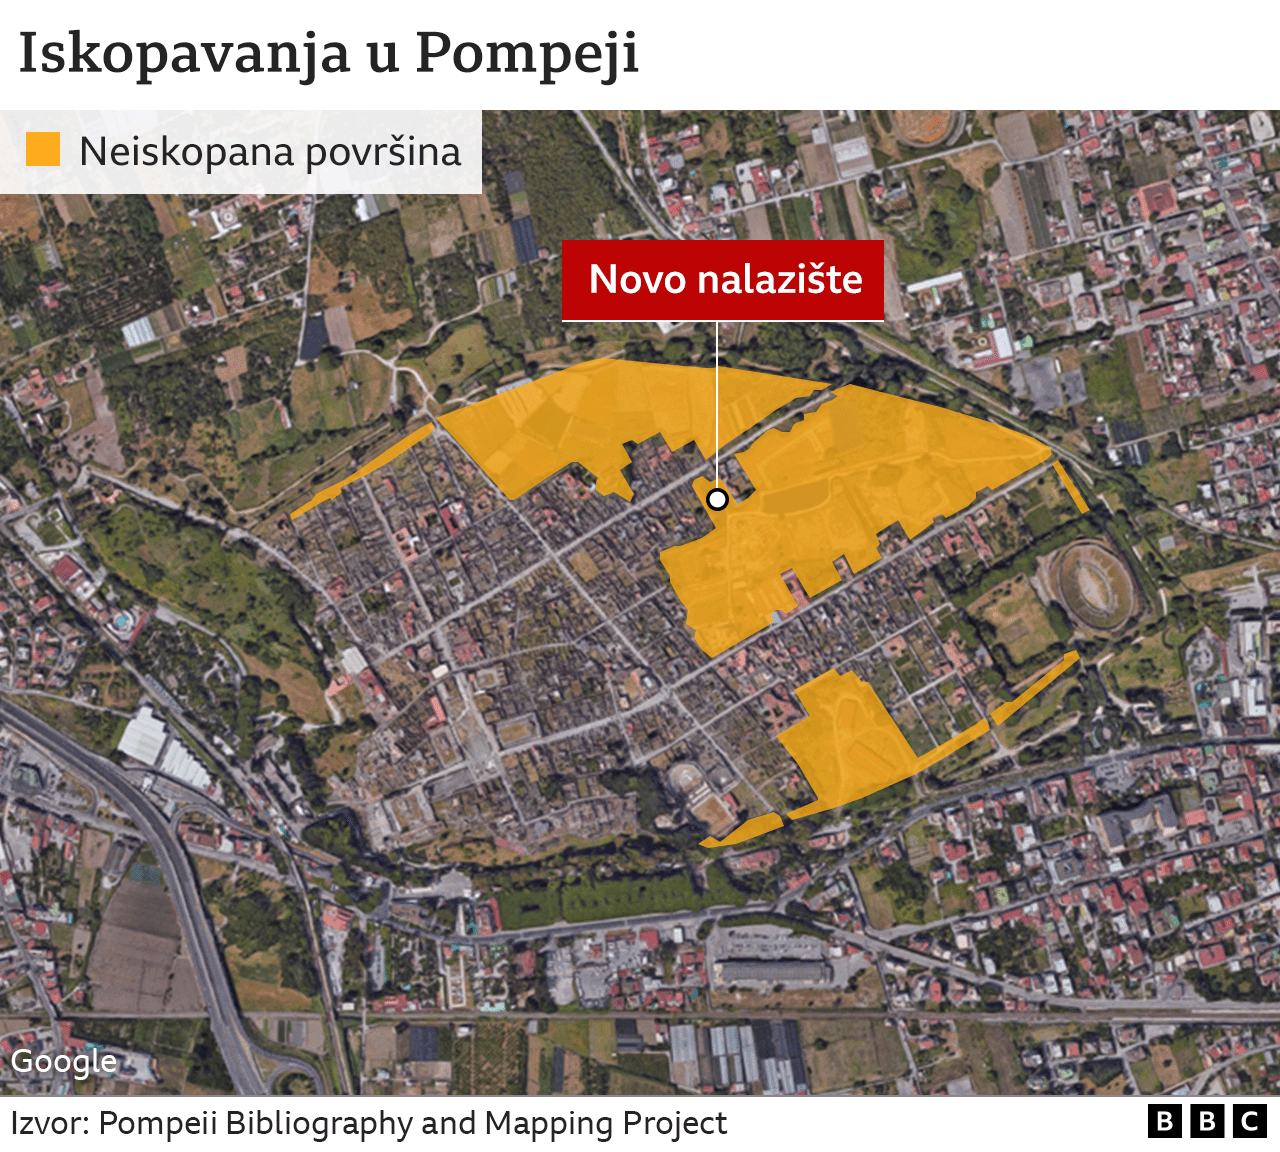 Pompeja, iskopavanja u Pompeji